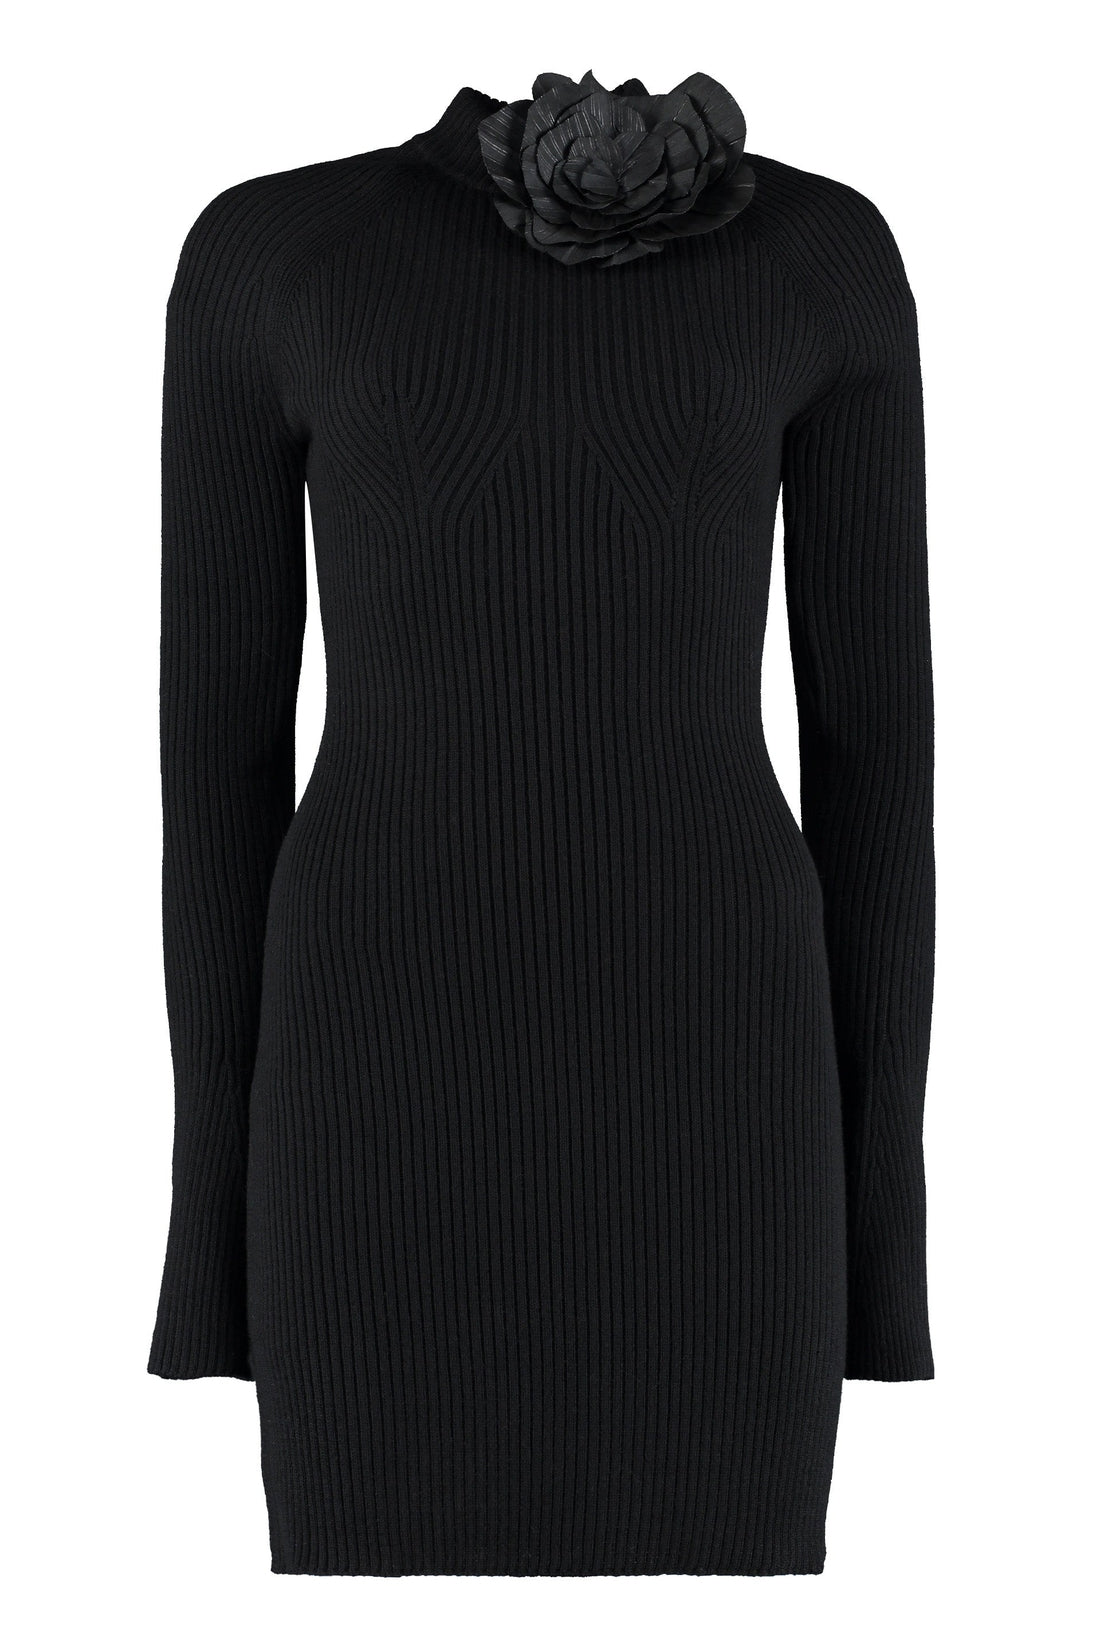 Blumarine-OUTLET-SALE-Ribbed knit dress-ARCHIVIST